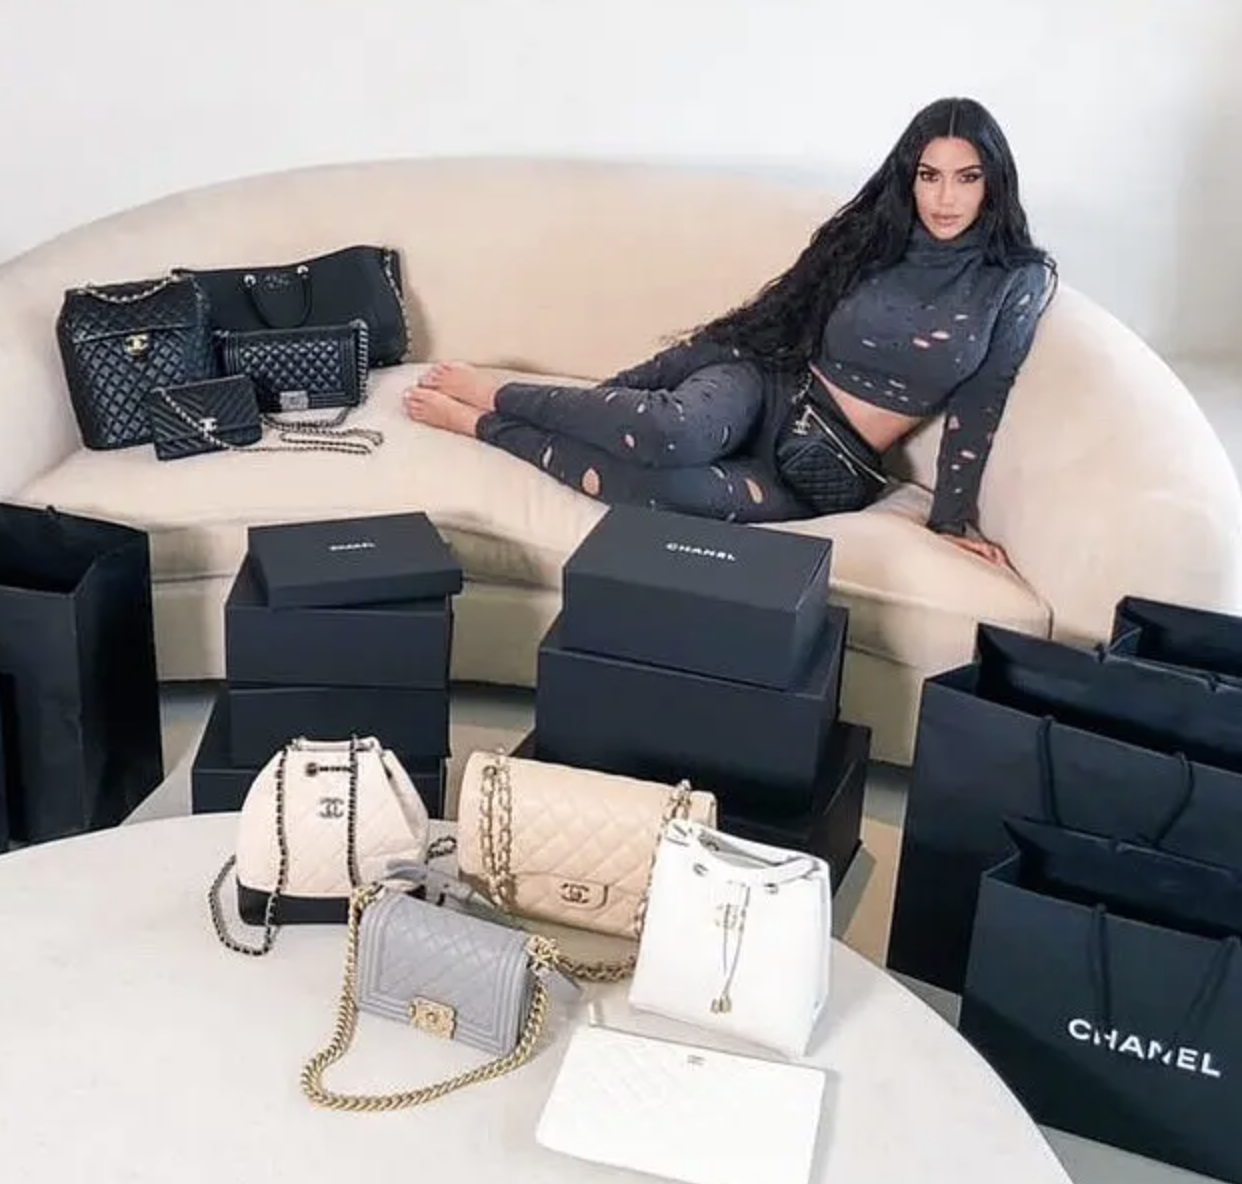 ITS HARD MAKING LUXURY DECISIONS 😭 #luxurybags #kimkardashian